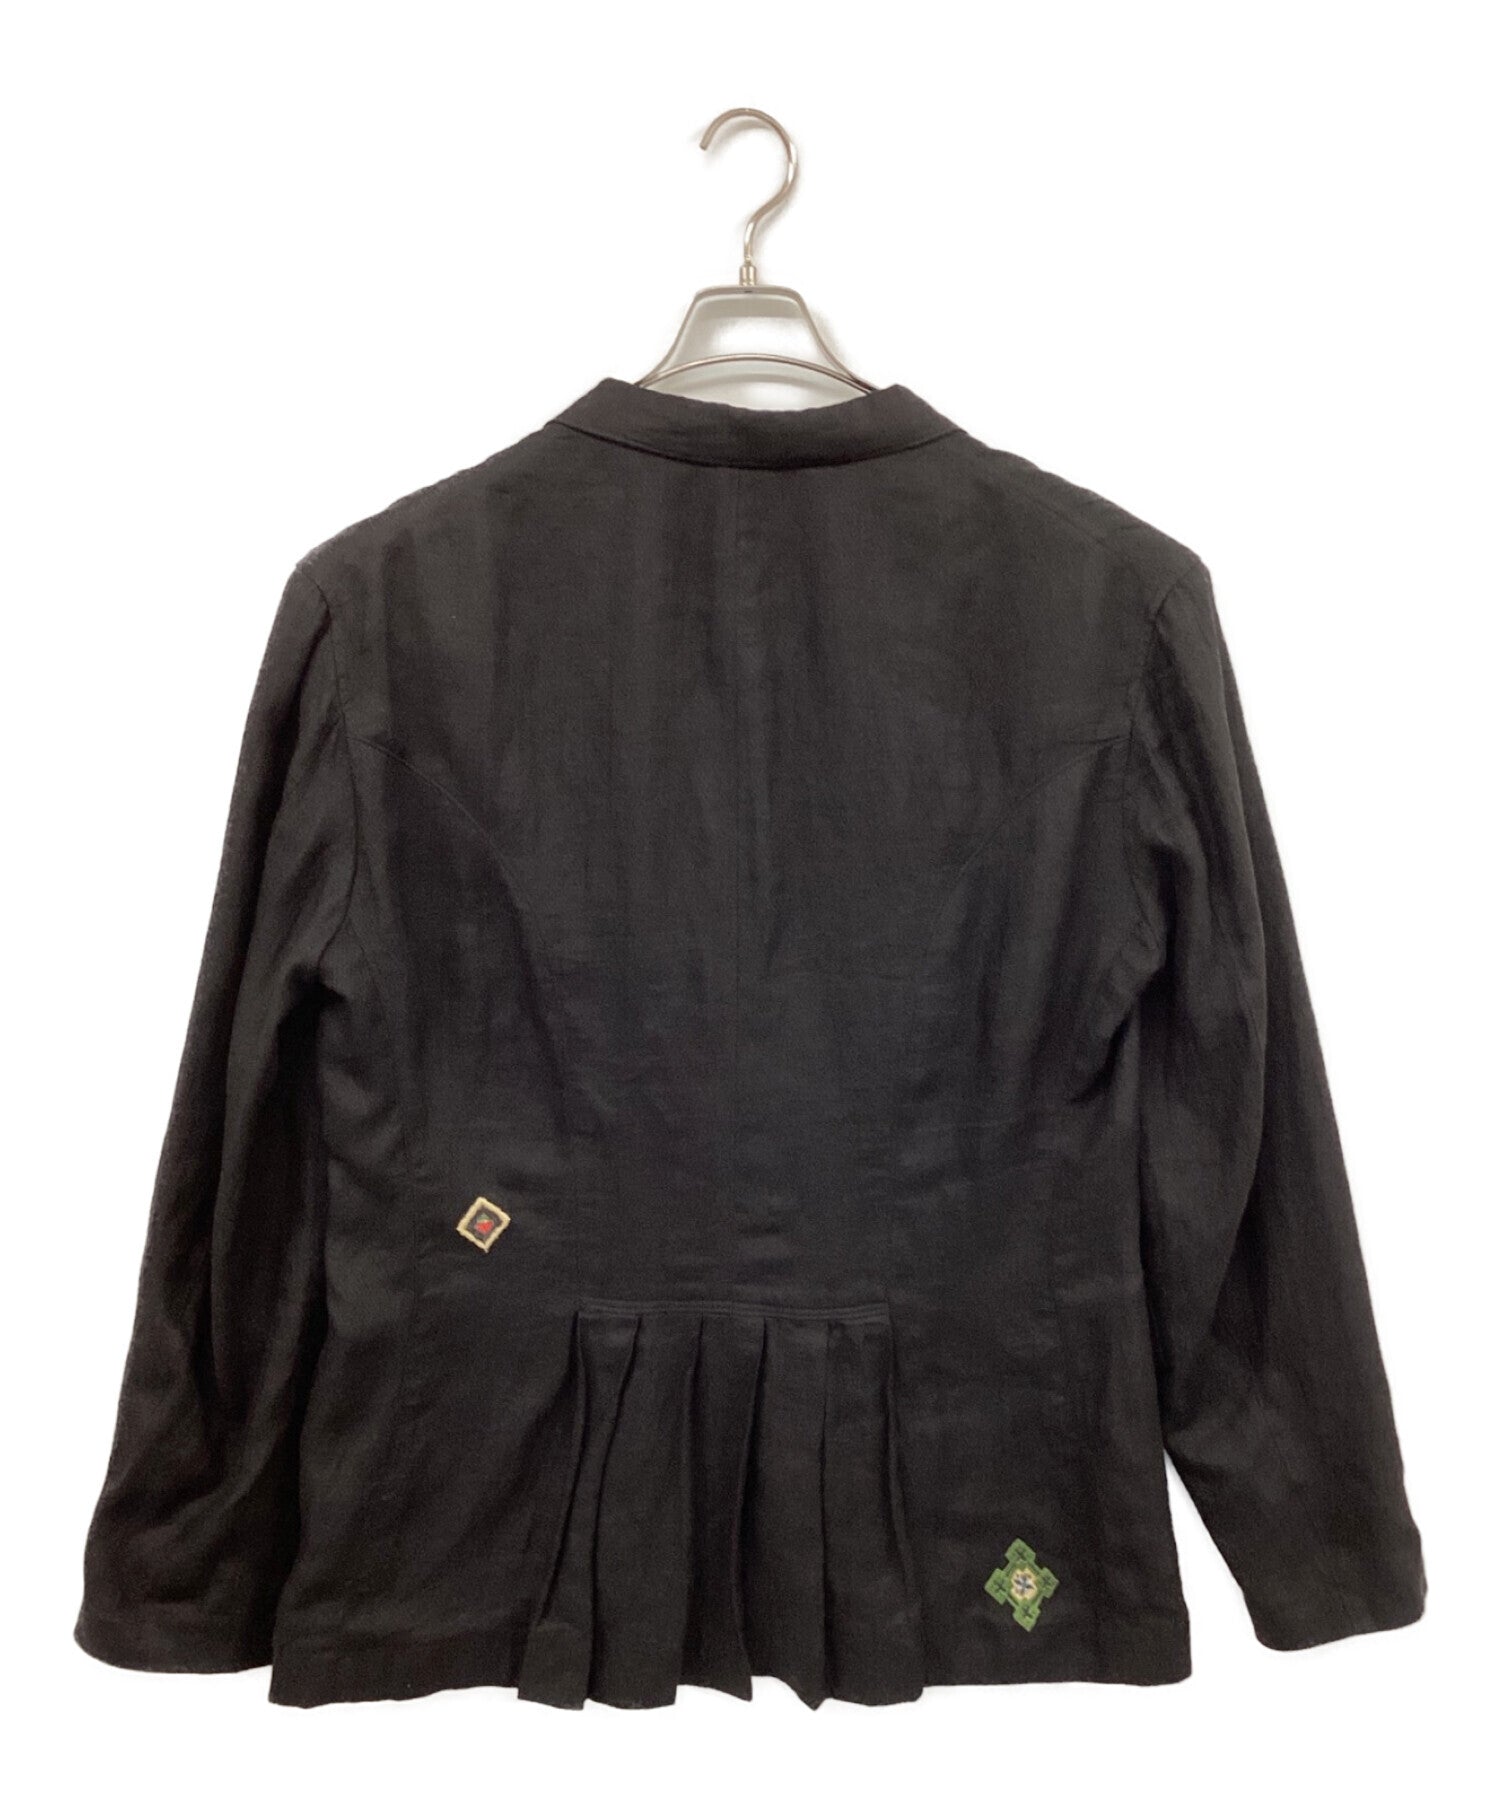 Yohji Yamamoto pour homme 11SS Linen Cotton Embroidered 2B Jacket Tailored  Jacket HO-J54-309